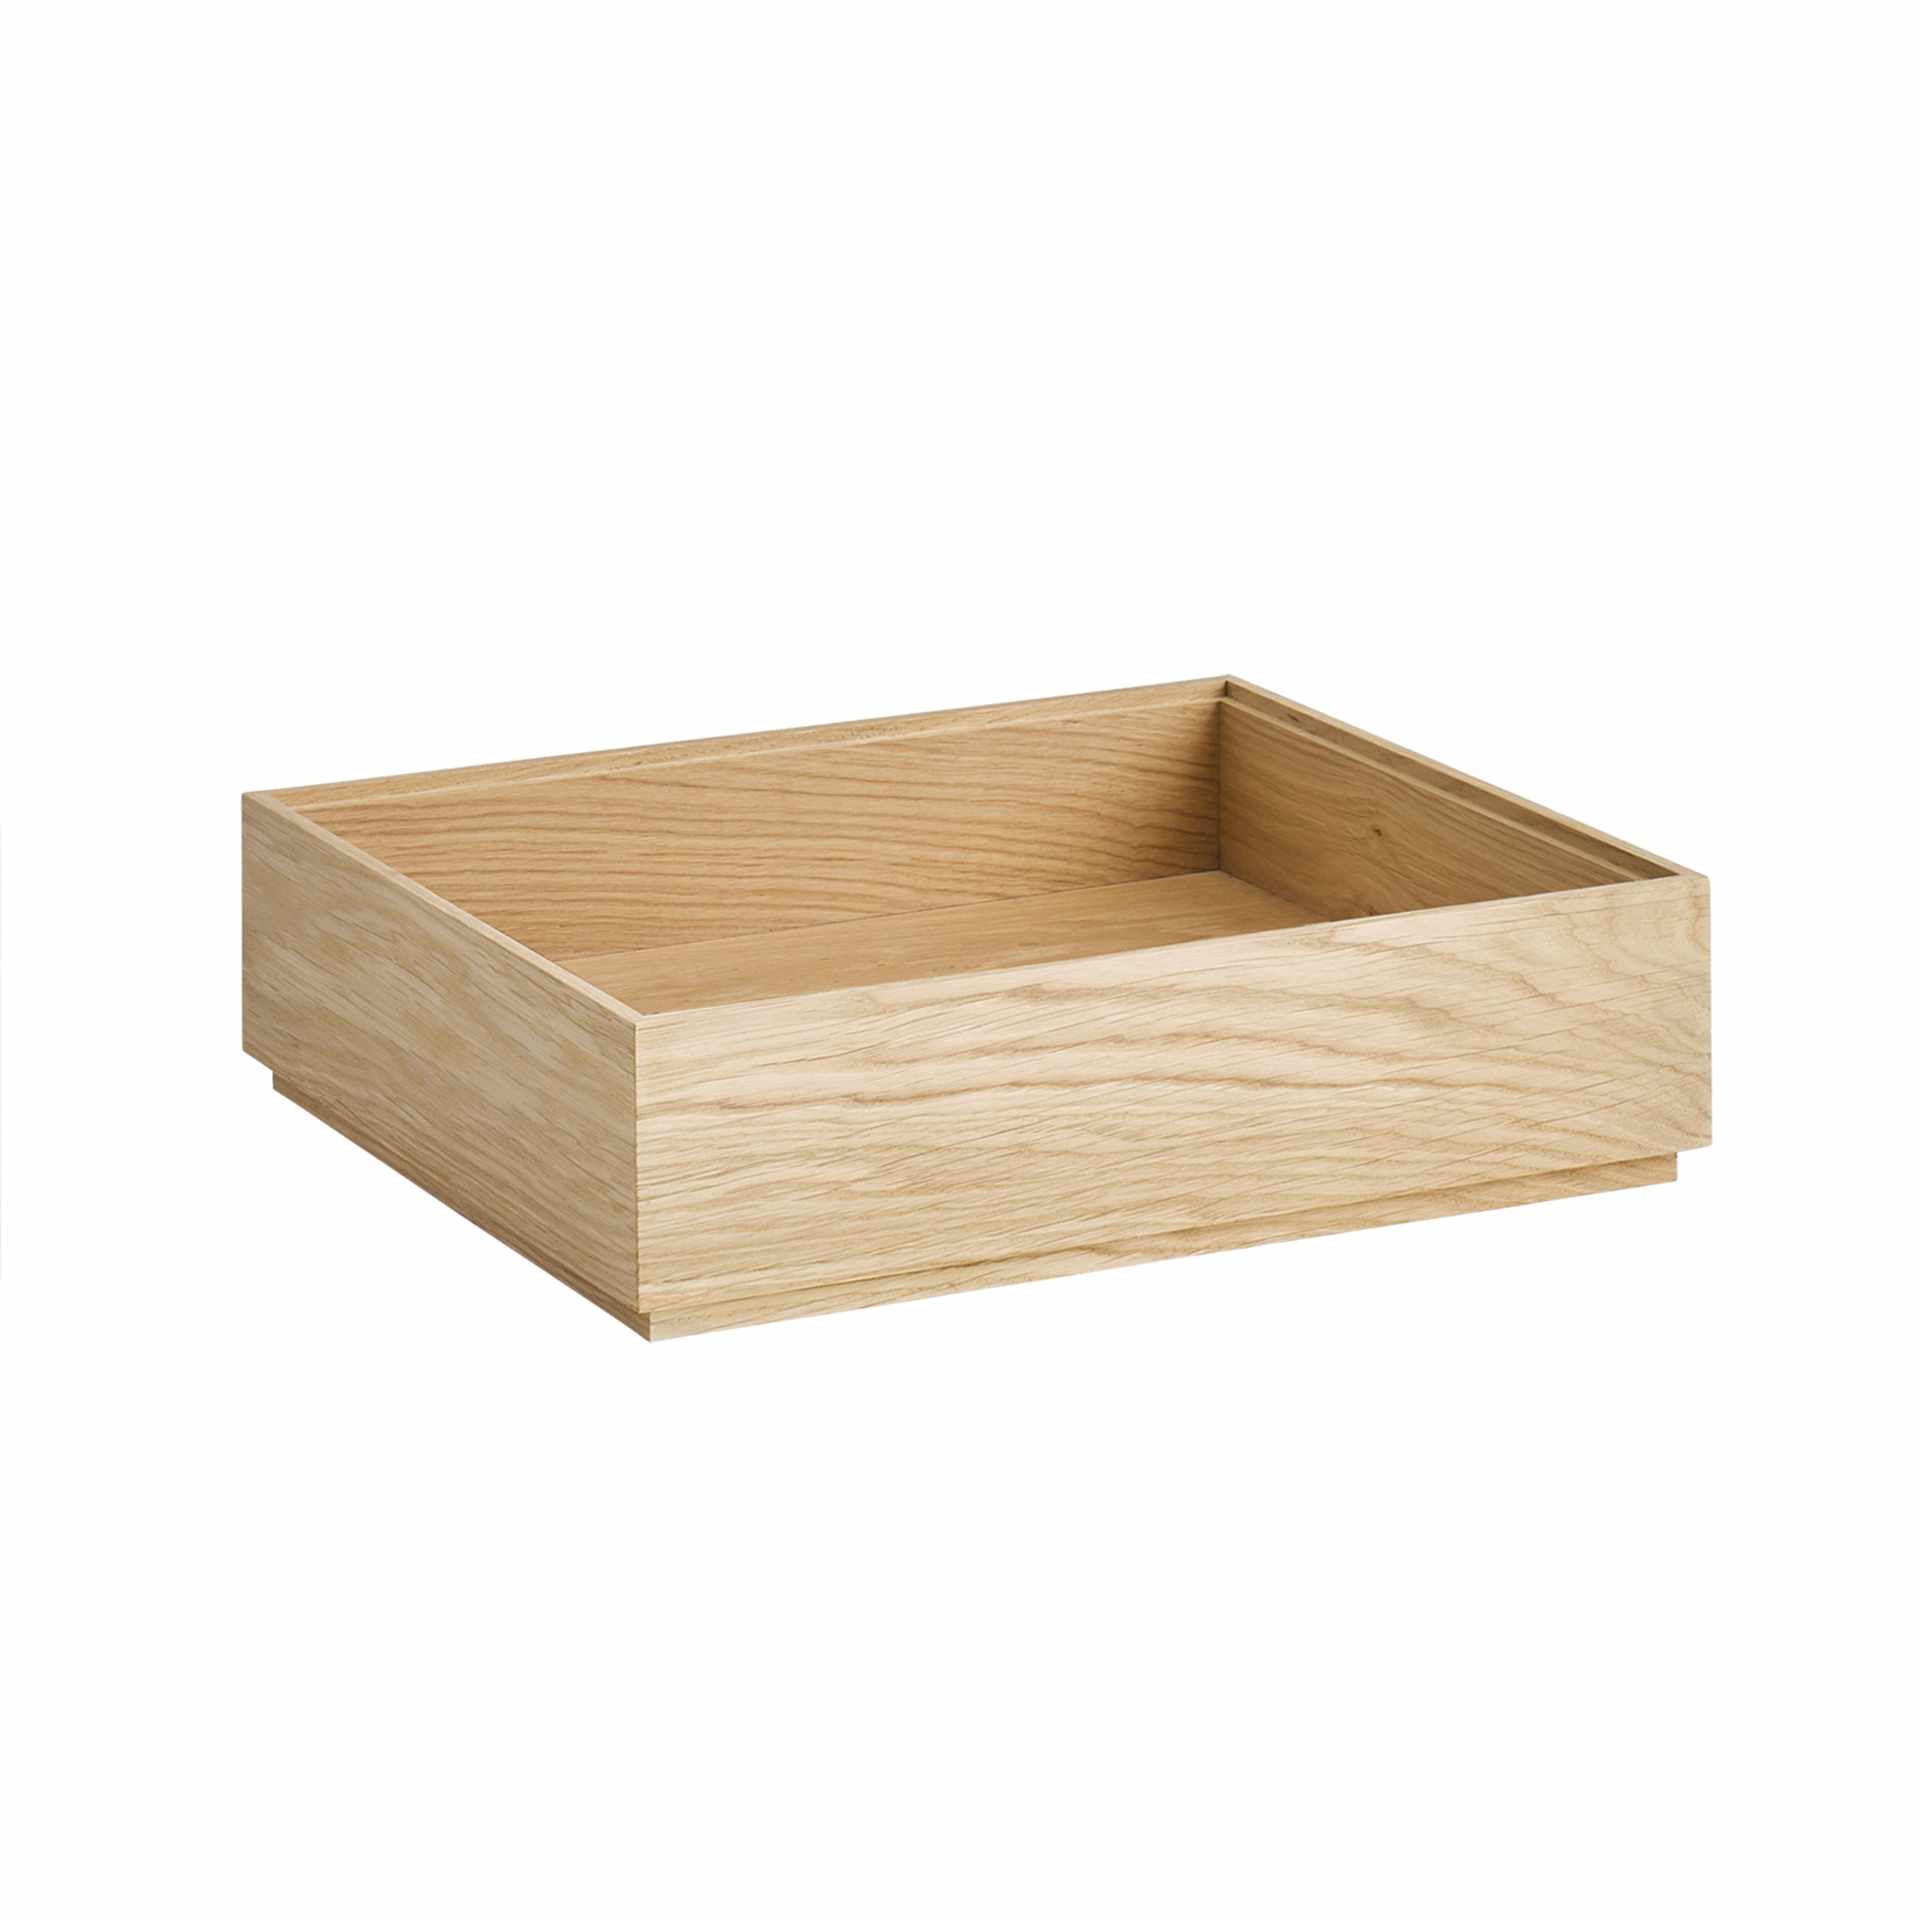 GN-Holzbox - Serie Valo - braun - Höhe 8,5 cm - GN 1/2 (325 x 265 mm) - Eichenholz - 14004-B